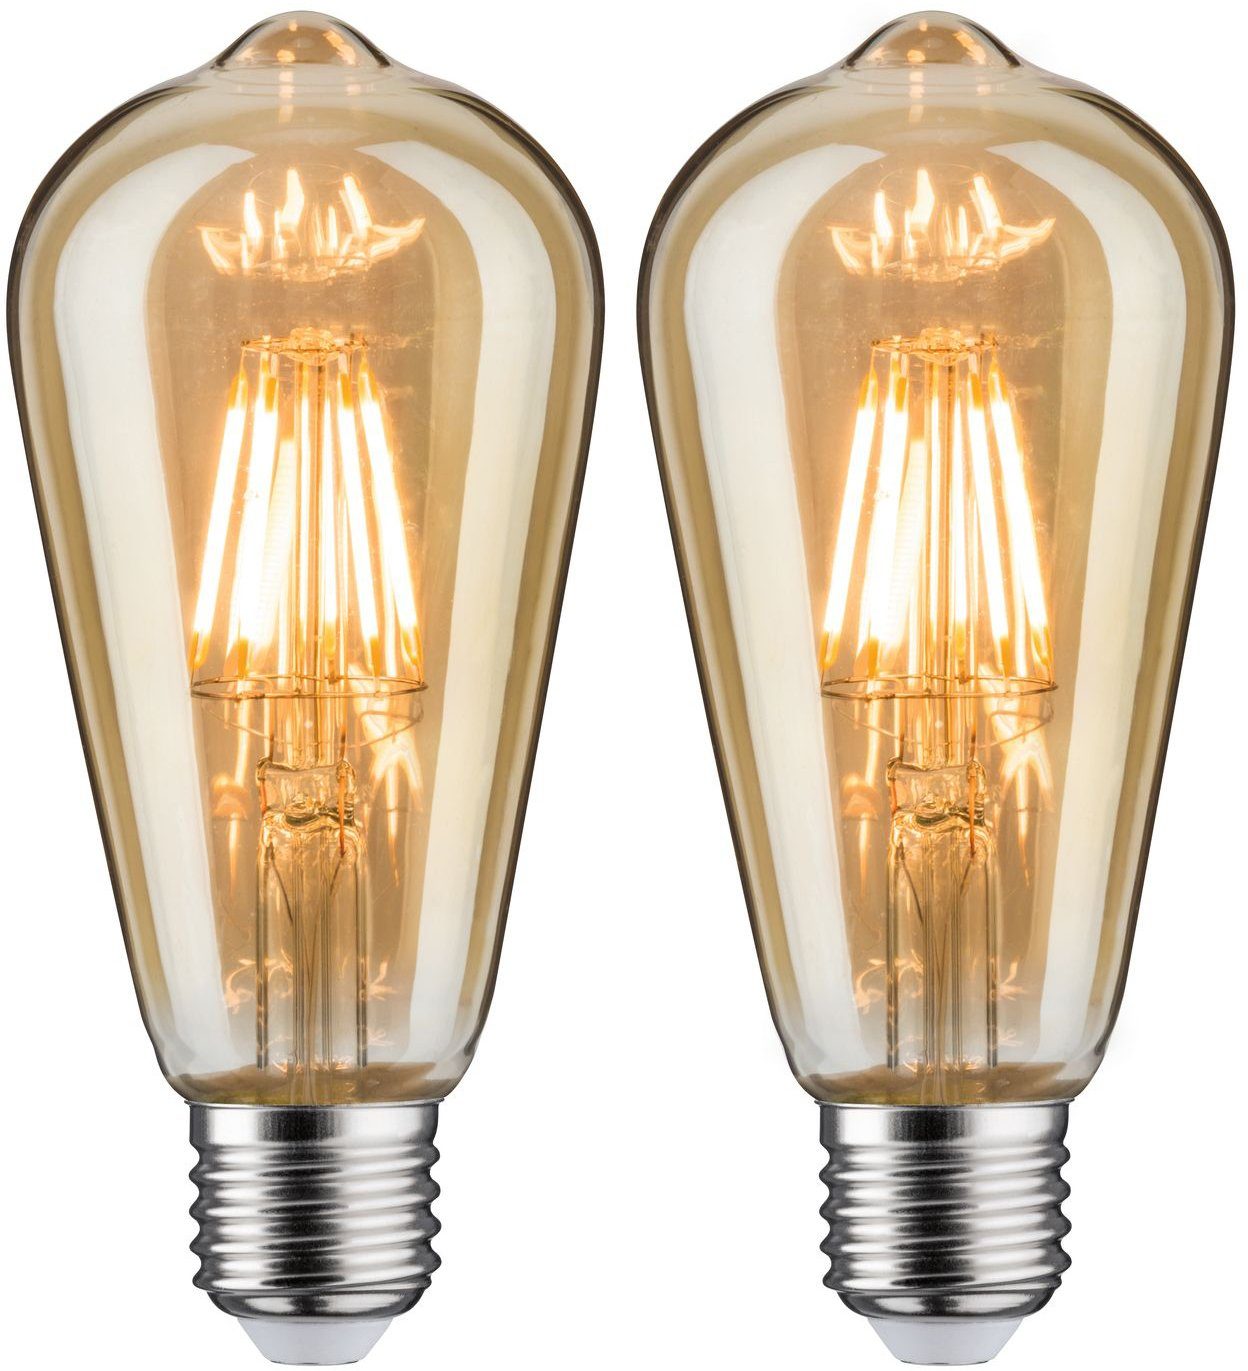 LED-Leuchtmittel Paulmann 6,5 W, Extra-Warmweiß E27, Bundle 2 ST64 2x gold St.,